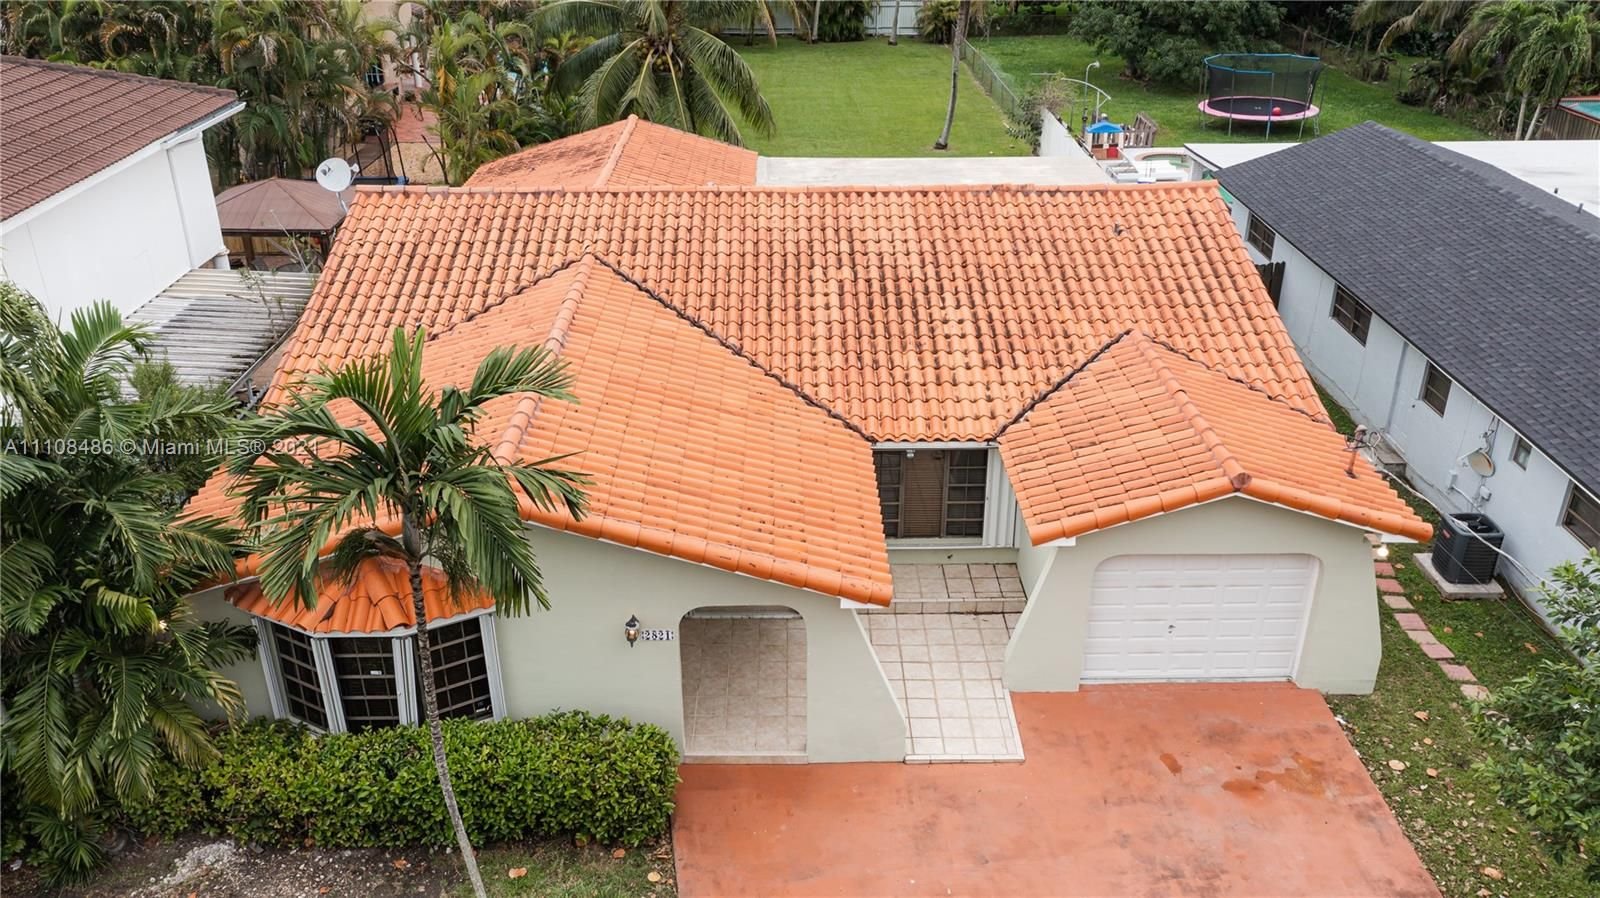 Real estate property located at 2821 117th Ave, Miami-Dade County, Miami, FL